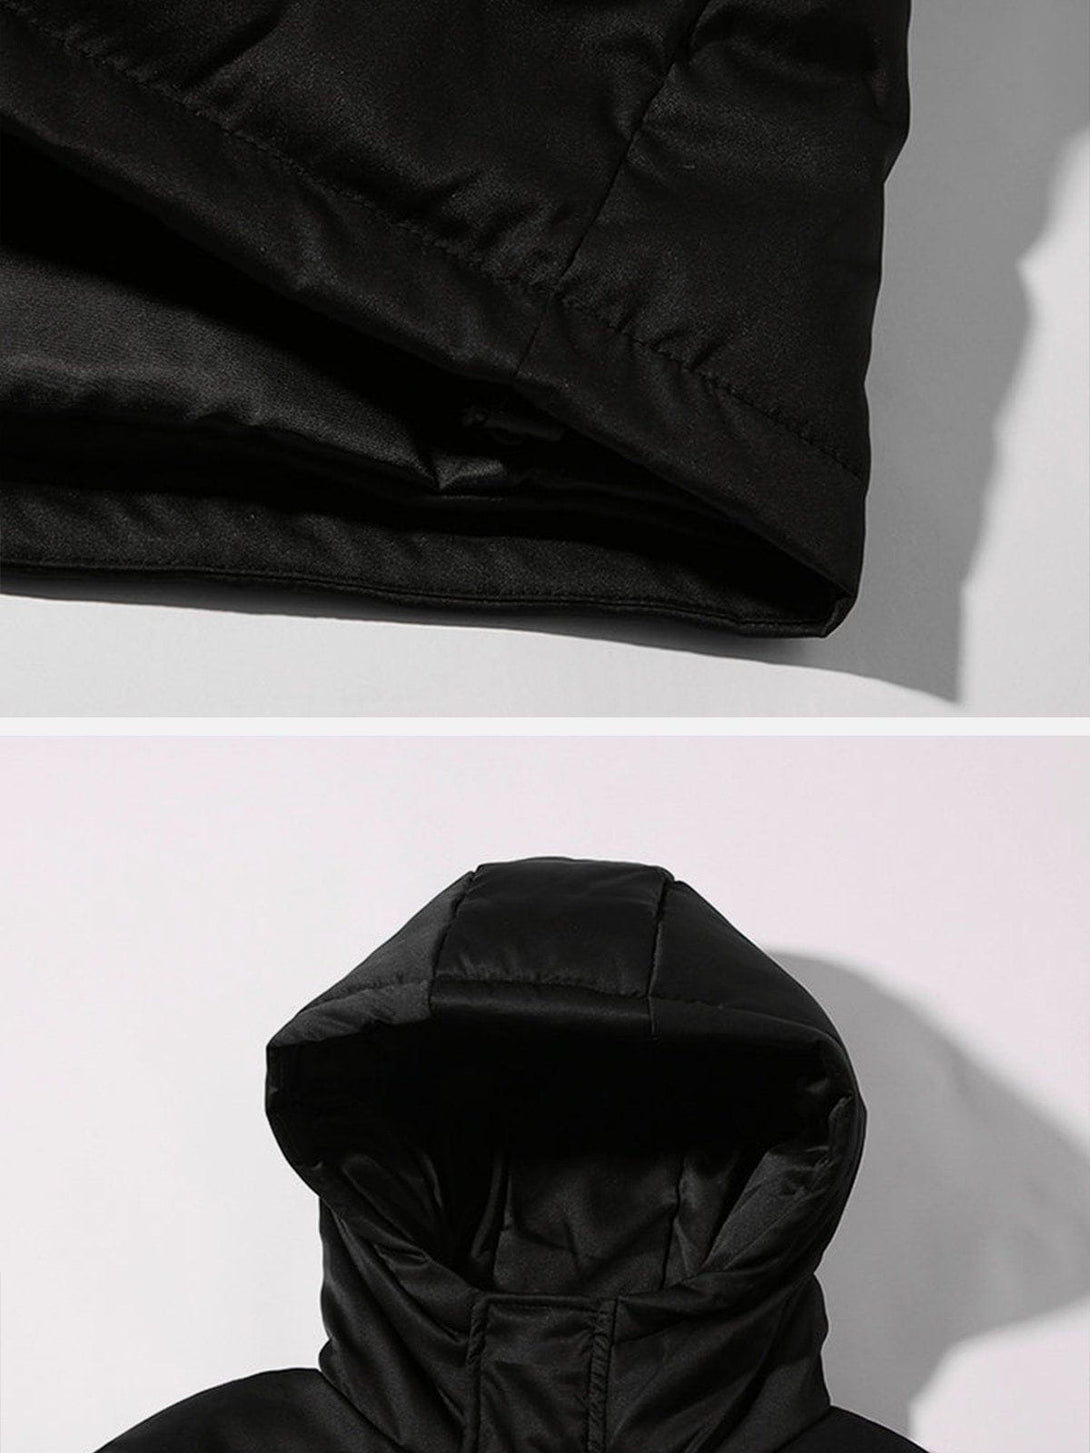 Majesda® - Simple Earth Print Winter Coat outfit ideas streetwear fashion